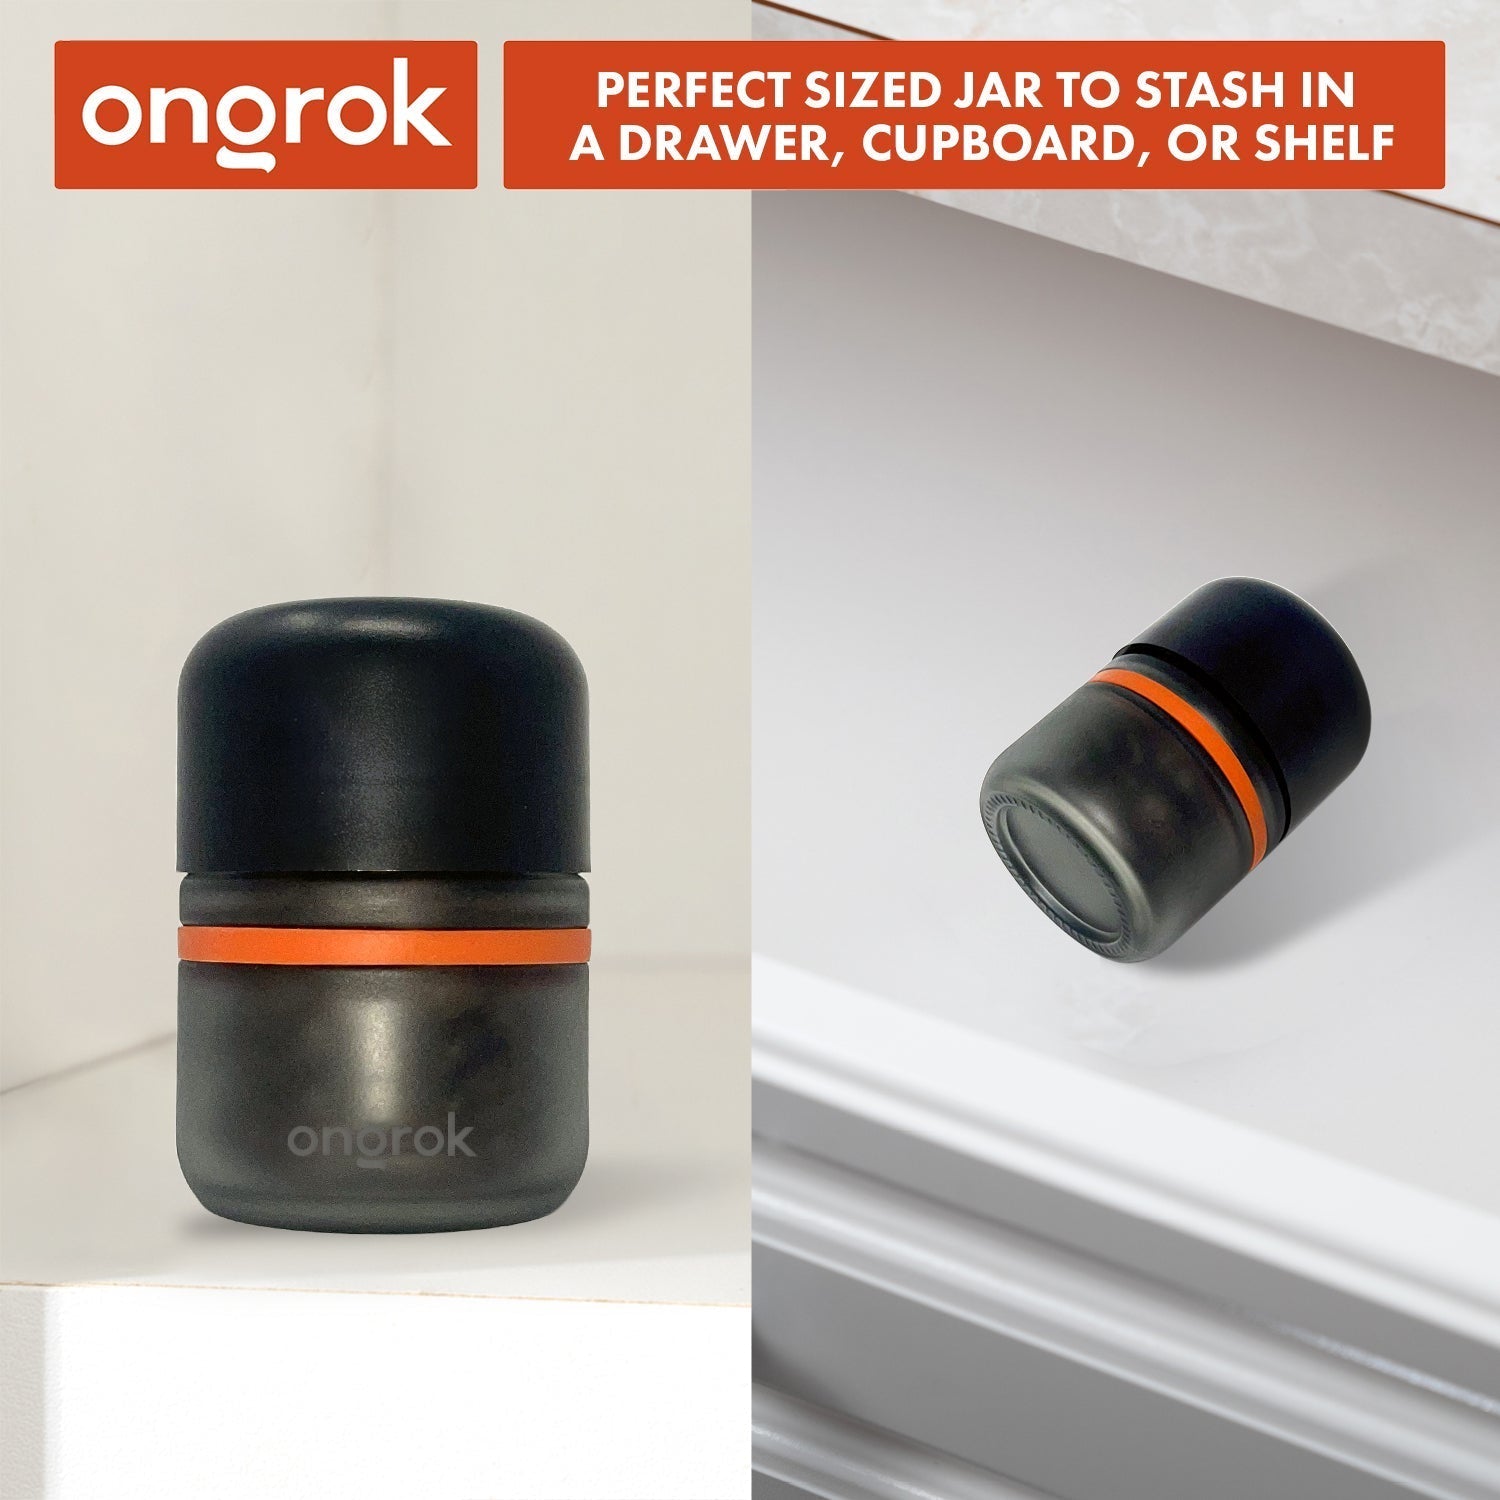 Ongrok 80ml Child Resistant Jar | 6 Pack